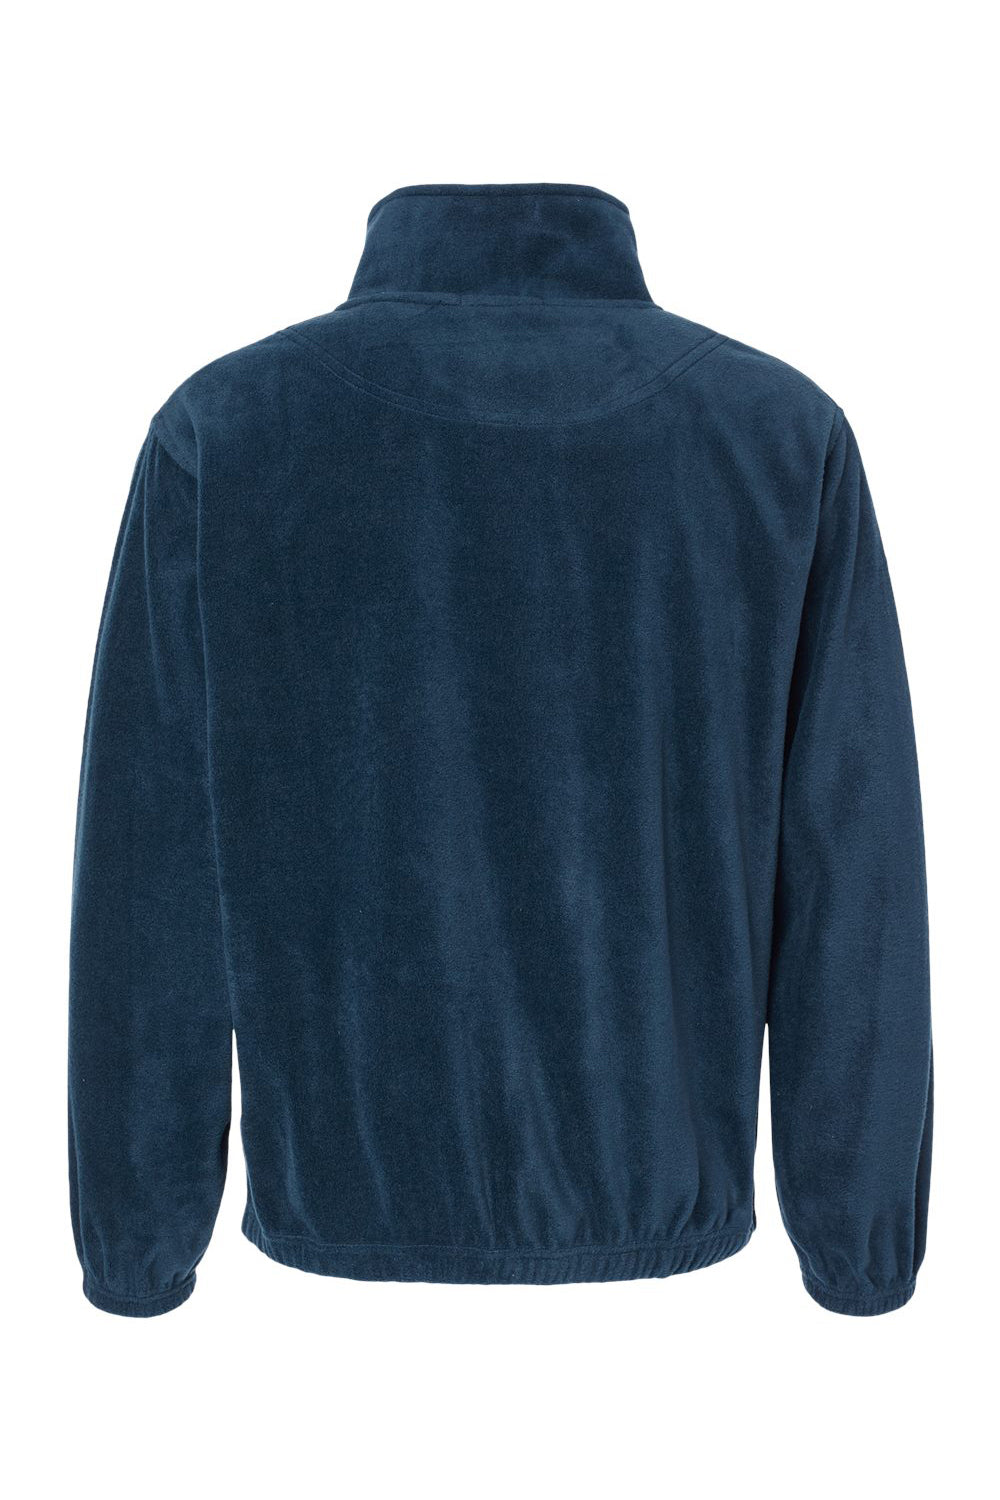 Burnside 3062 Mens Polar Fleece Full Zip Sweatshirt Navy Blue Flat Back